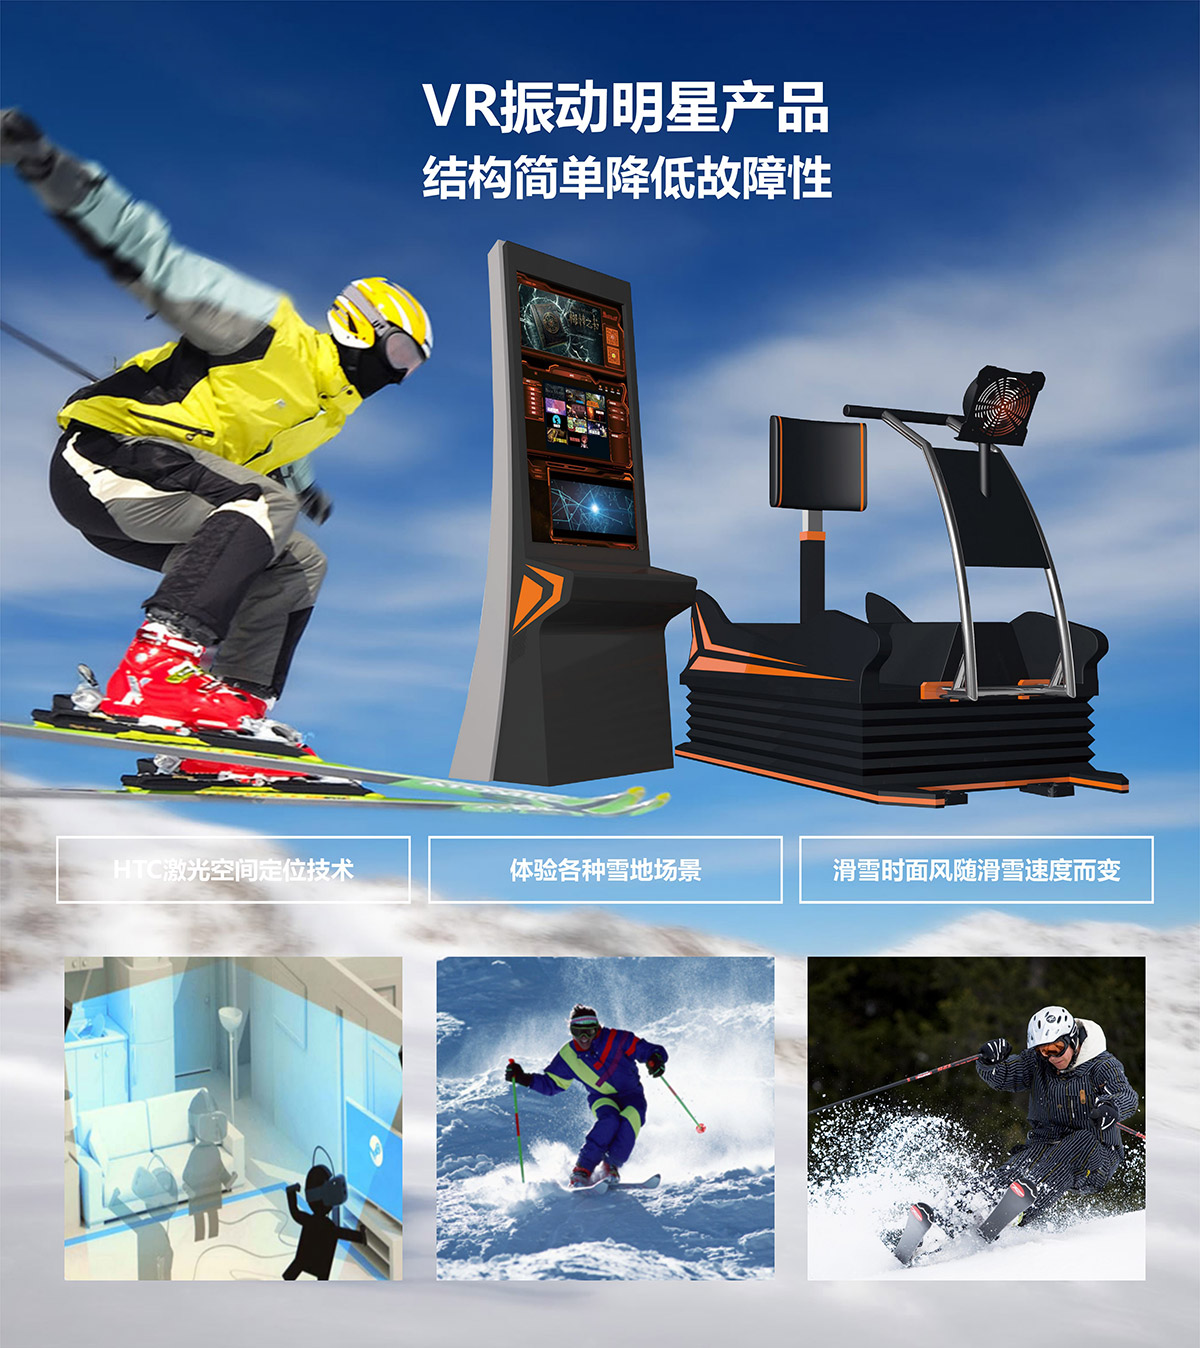 03-VR明星产品模拟滑雪.jpg